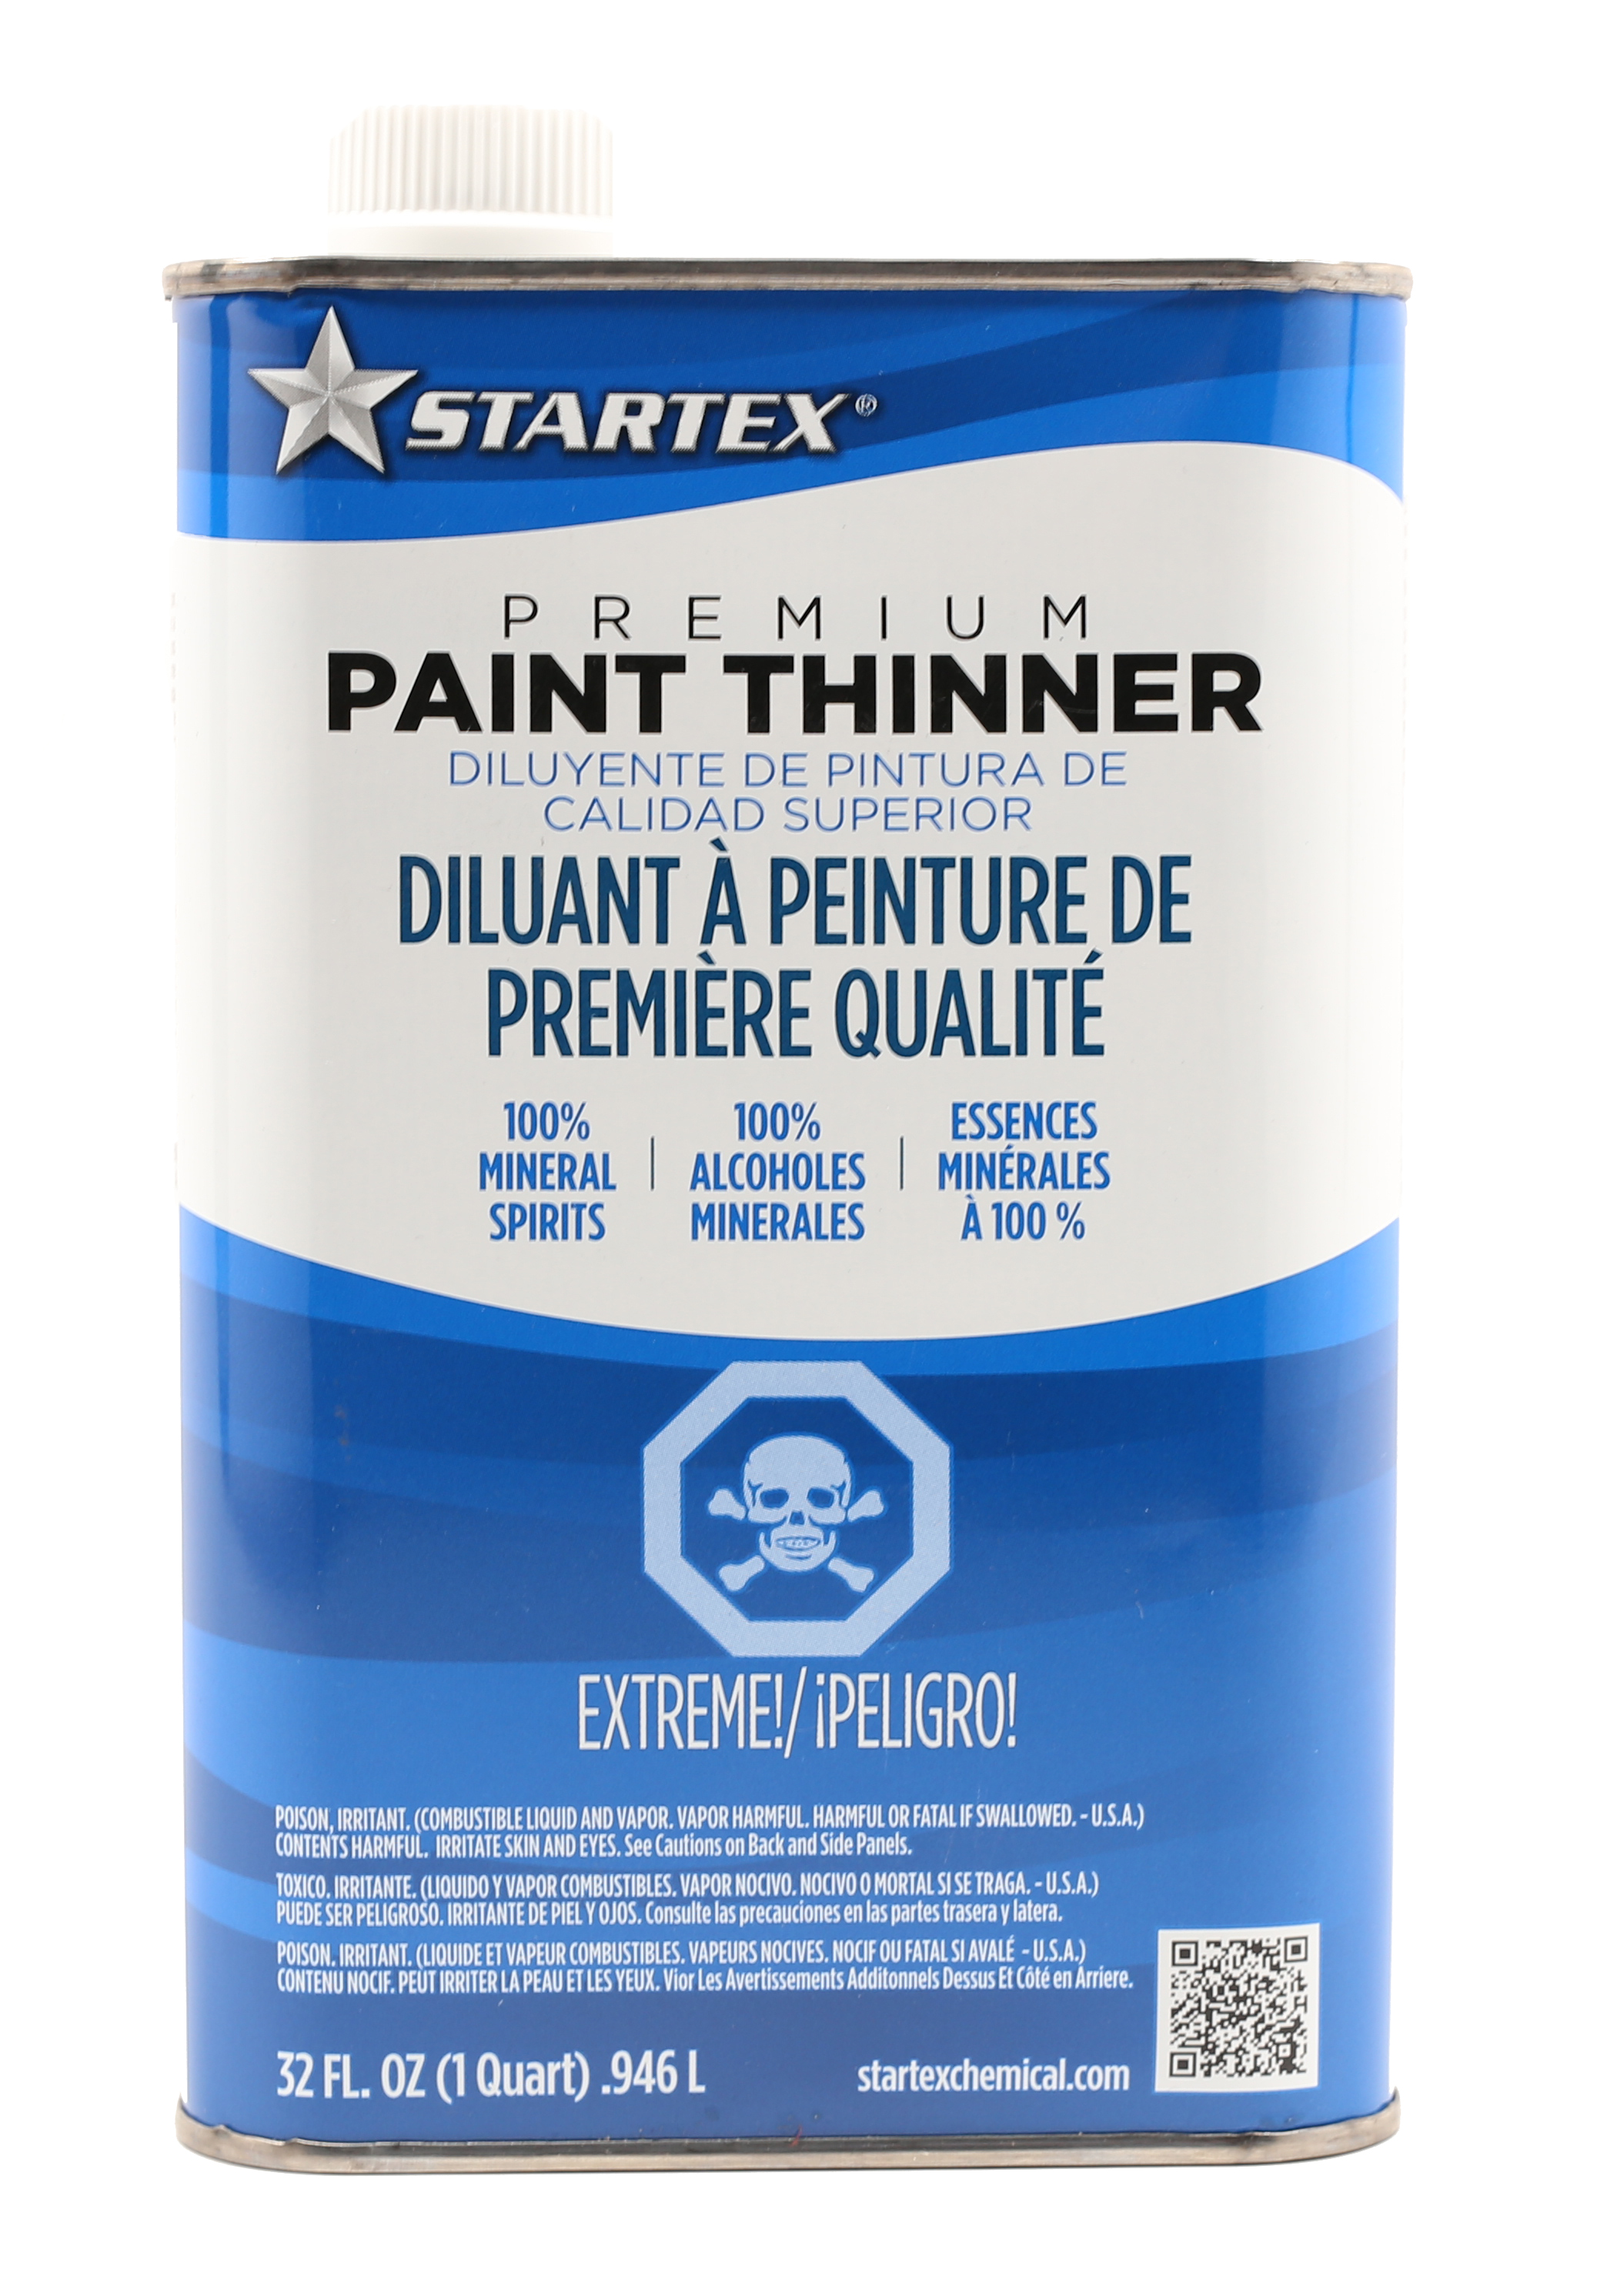 STARTEX Paint Thinner